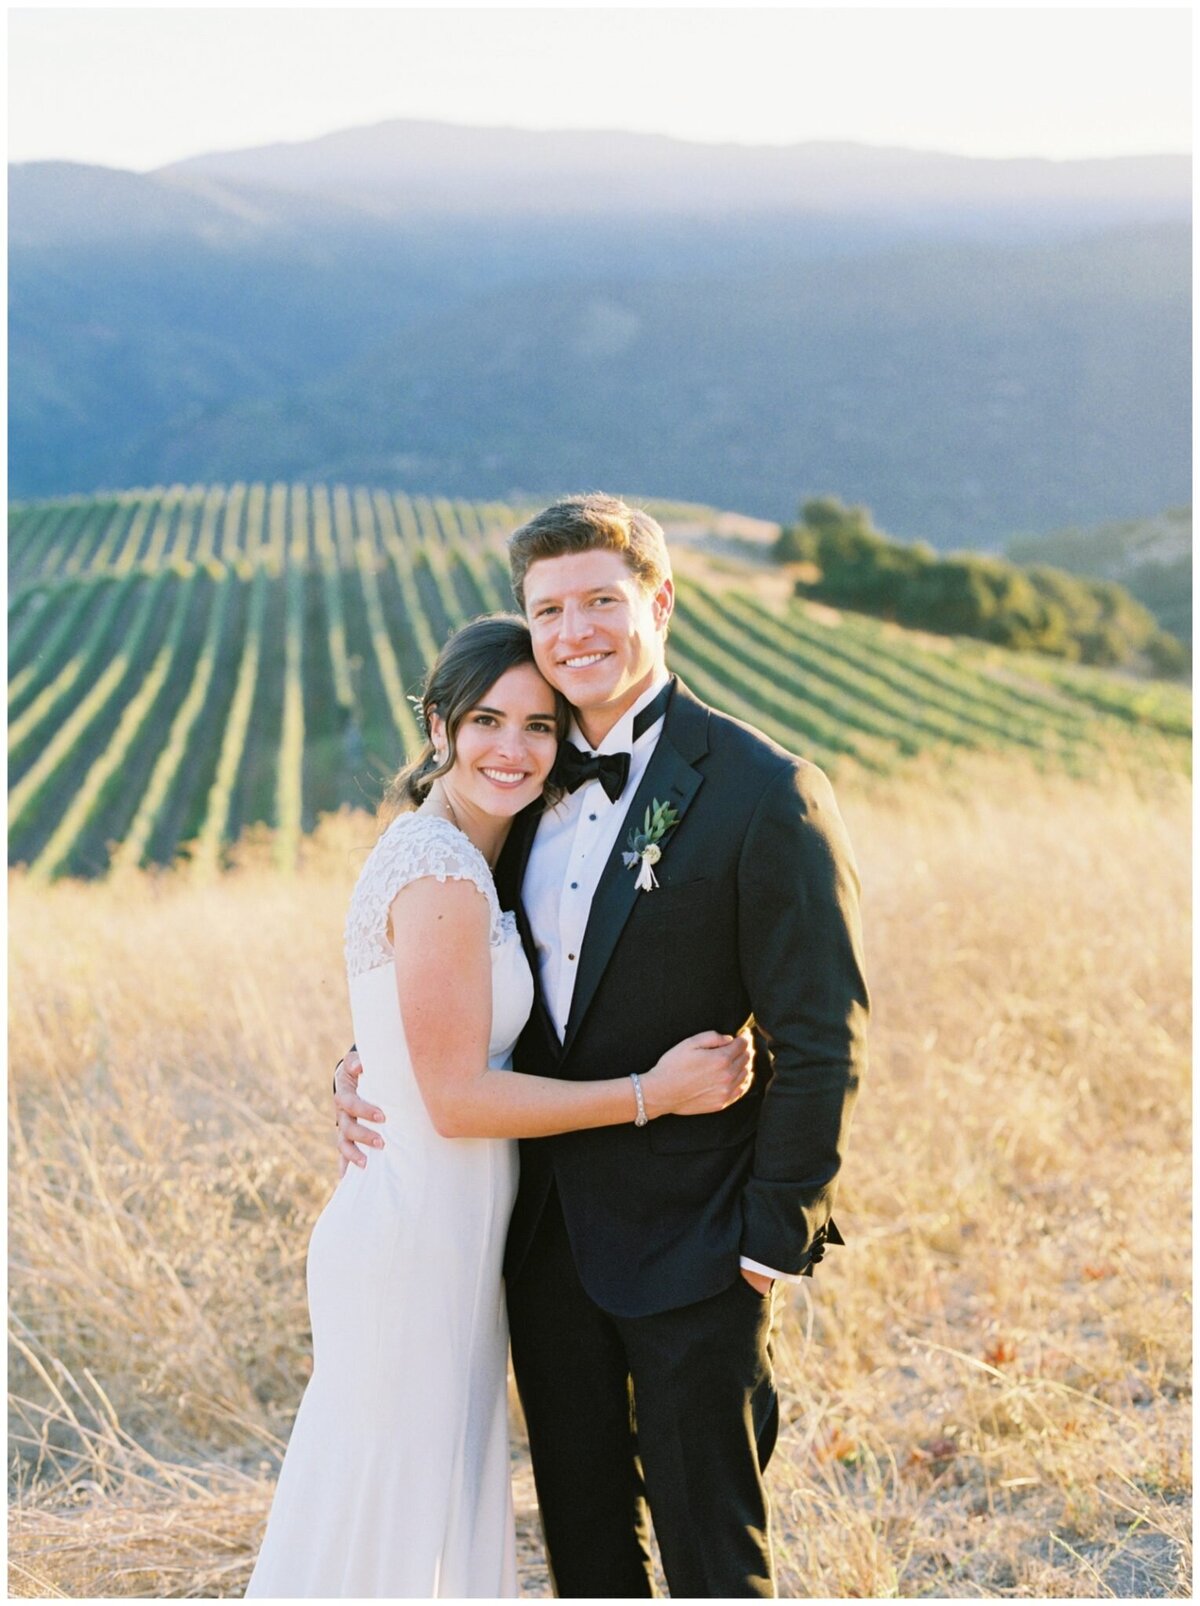 Katie-Jordan-Carmel-Valley-Holman-Ranch-Wedding-Cassie-Valente-Photography-0225-1530x2048